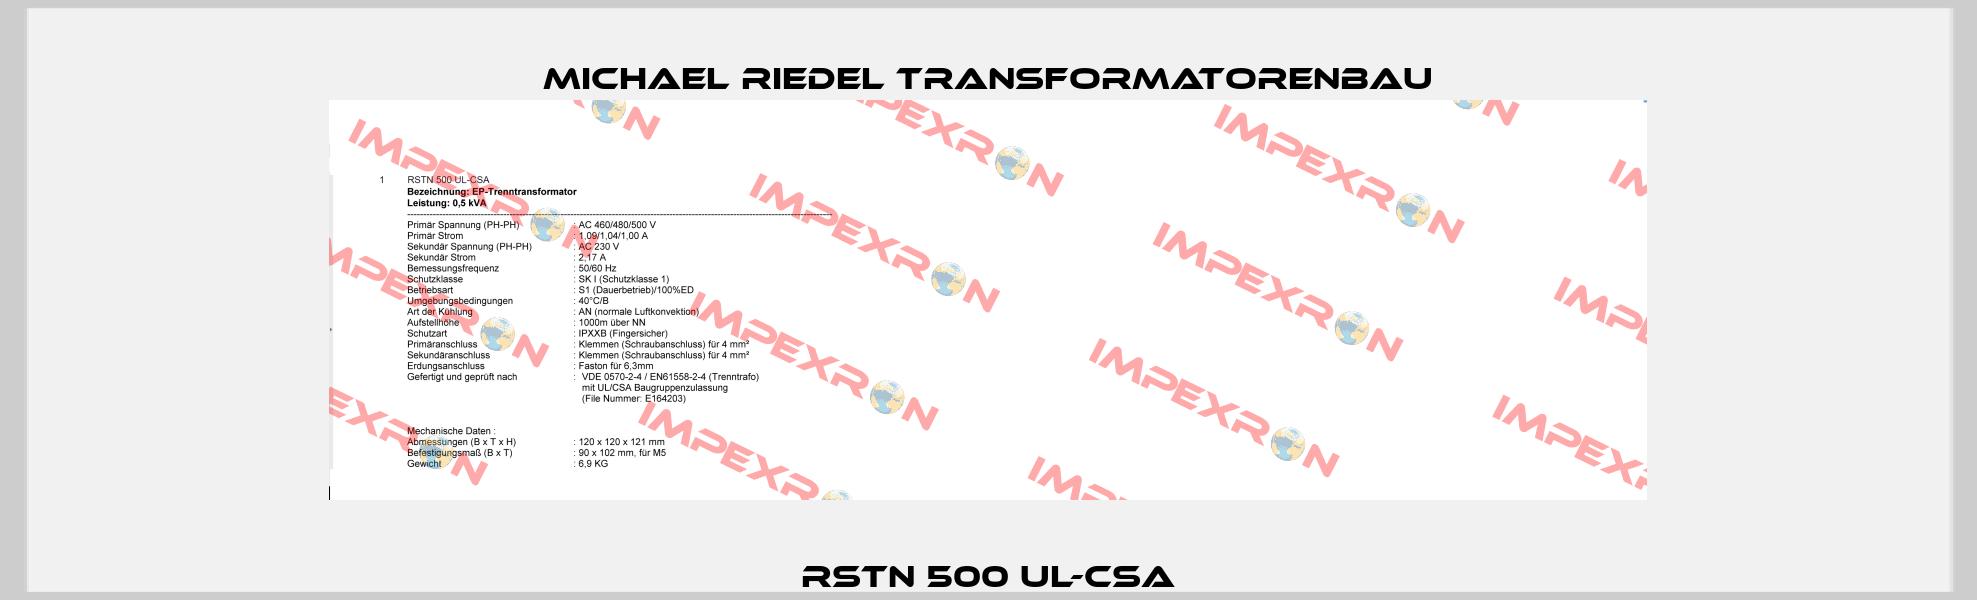 RSTN 500 UL-CSA Michael Riedel Transformatorenbau